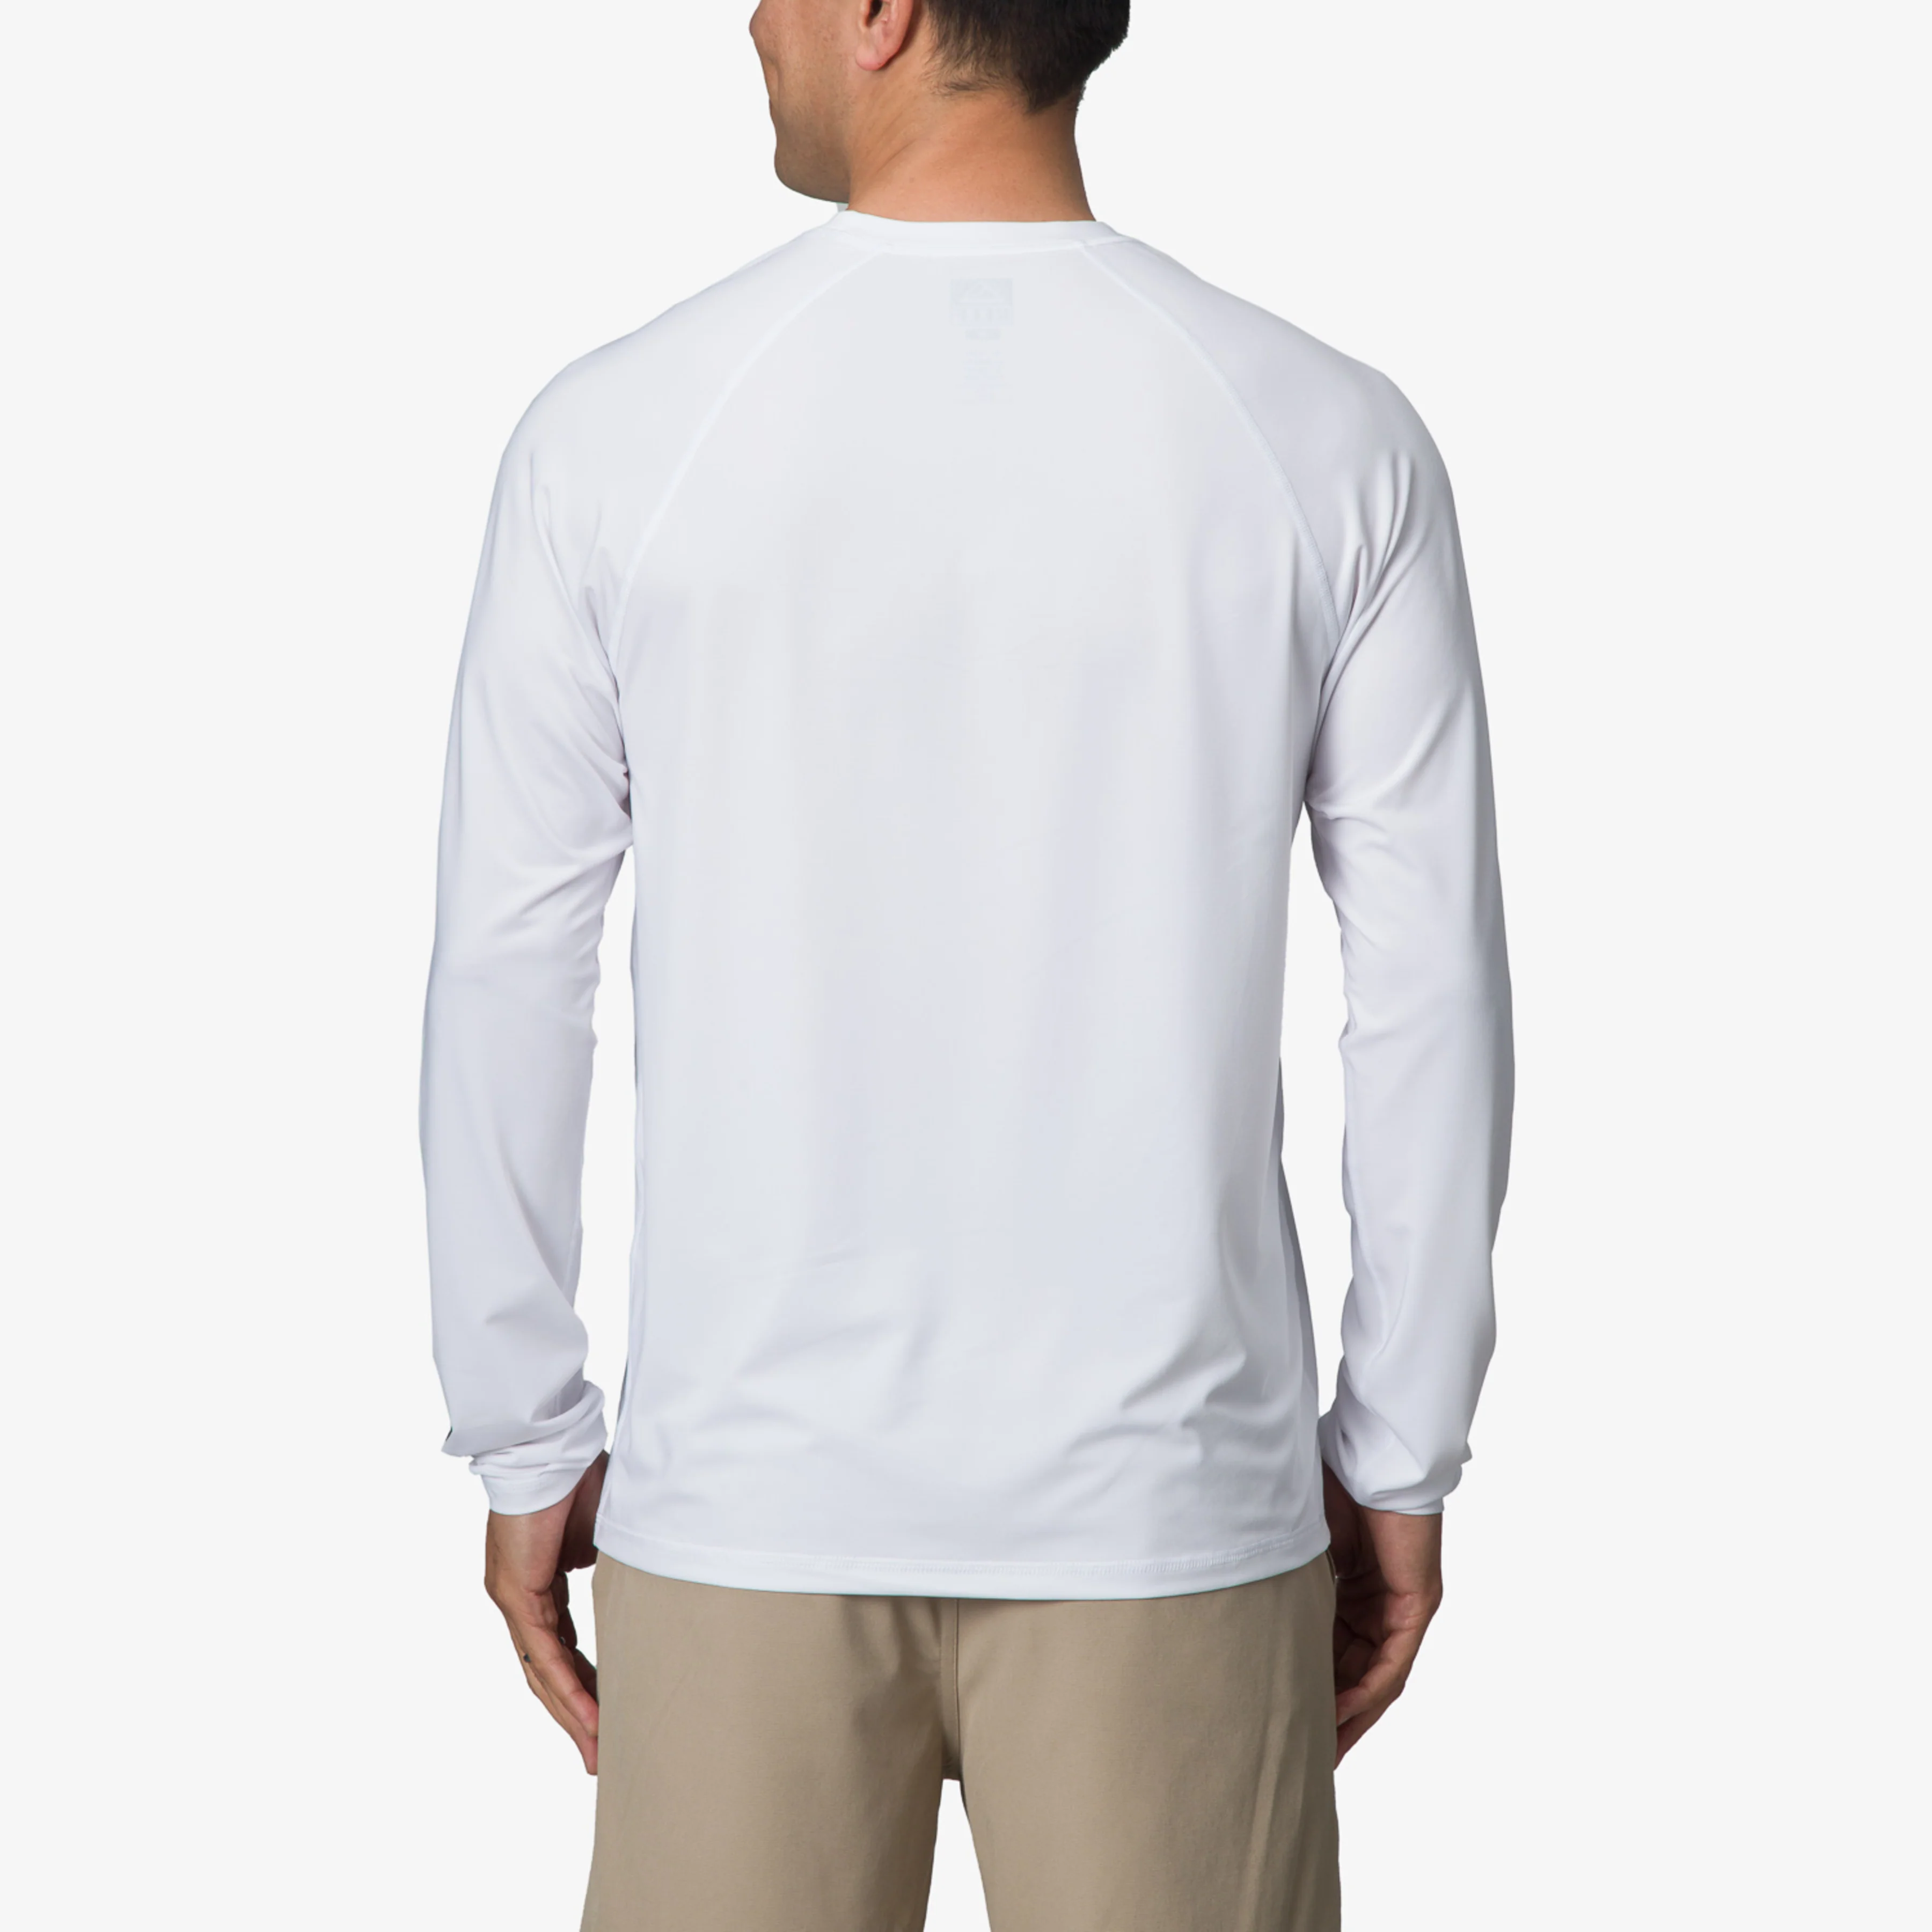 Kean Long Sleeve Surf Shirt 50 UPF